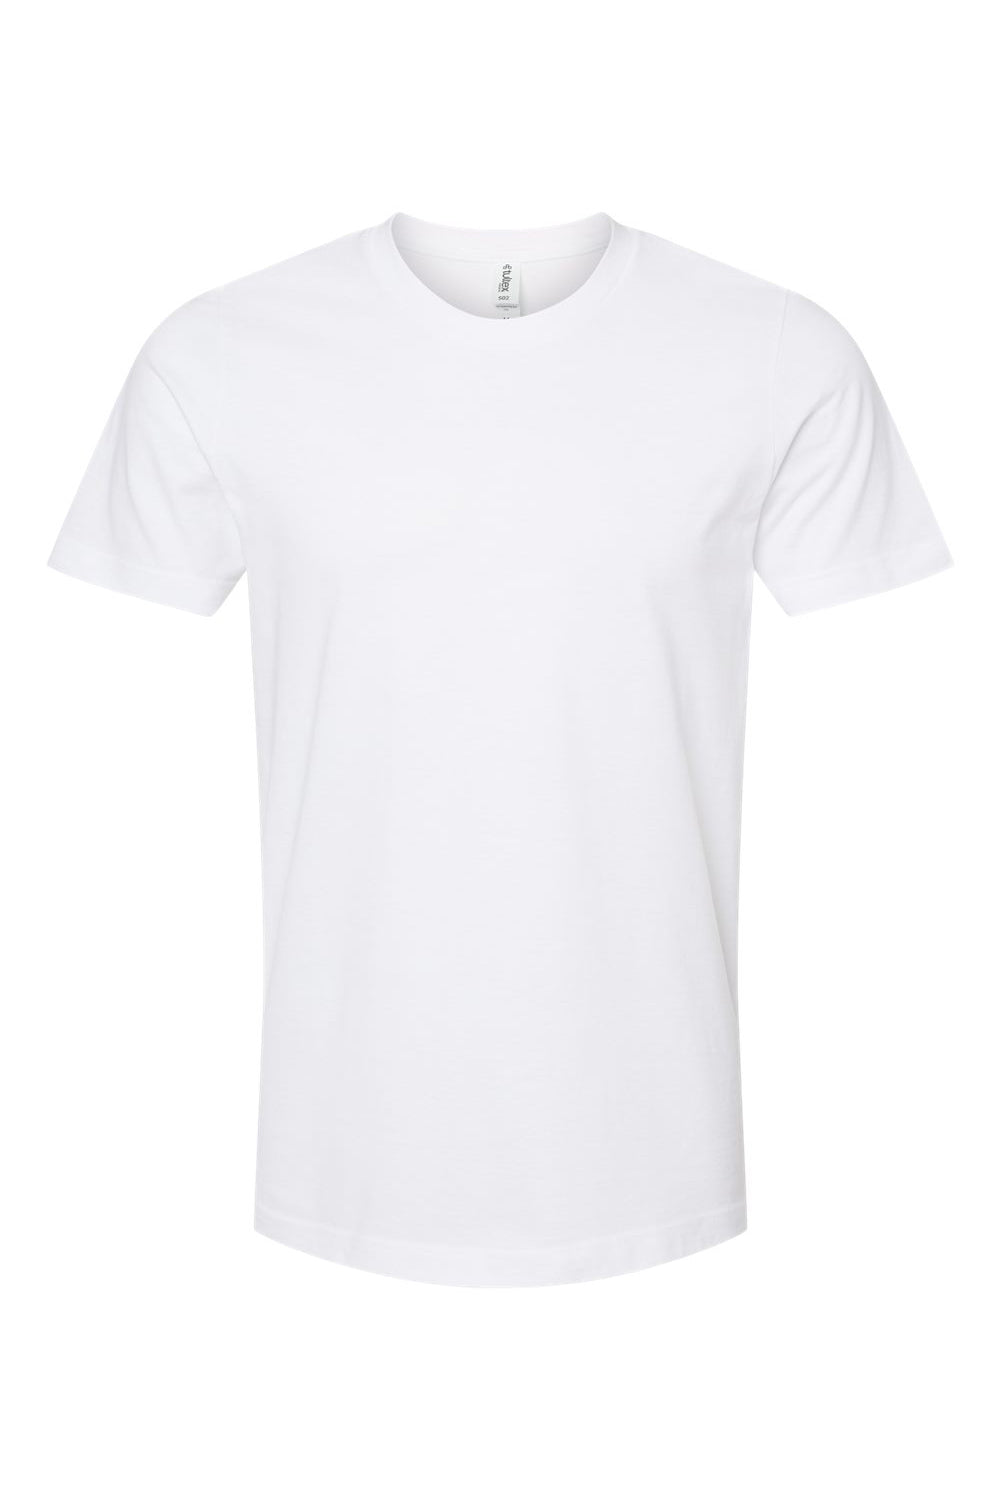 Tultex 602 Mens Short Sleeve Crewneck T-Shirt White Flat Front